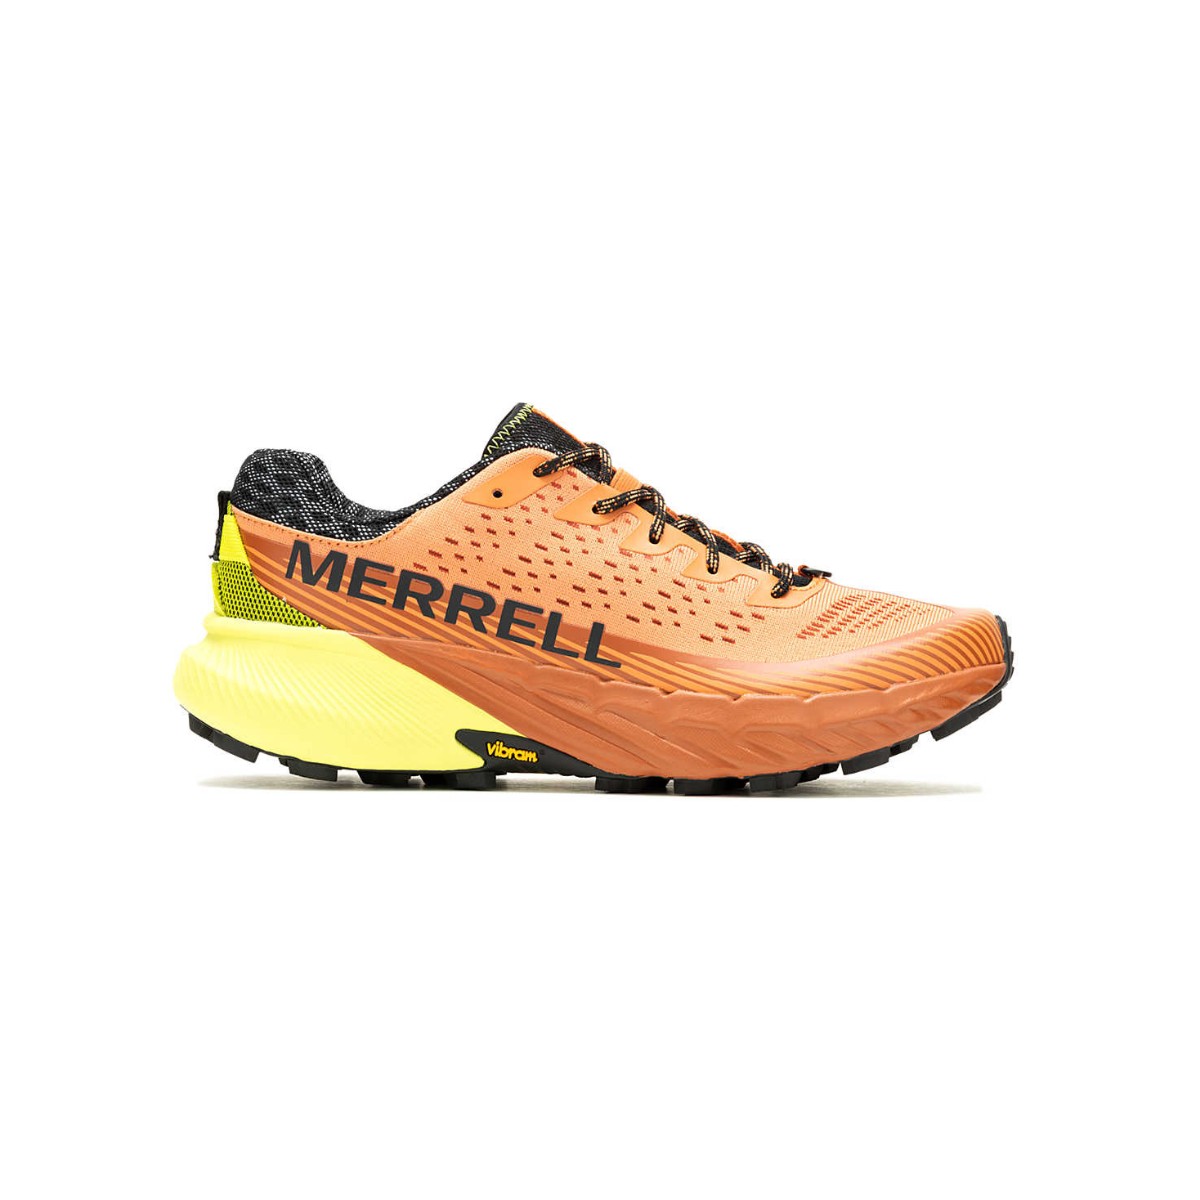 Gel de günstig Kaufen-Merrell Agility Peak 5 Orange Gelb SS24 Laufschuhe, Größe 41 - EUR. Merrell Agility Peak 5 Orange Gelb SS24 Laufschuhe, Größe 41 - EUR <![CDATA[Merrell Agility Peak 5 Schuhe
 Entdecken Sie neue Trails mit den Merrell Agility Peak 5-Sch